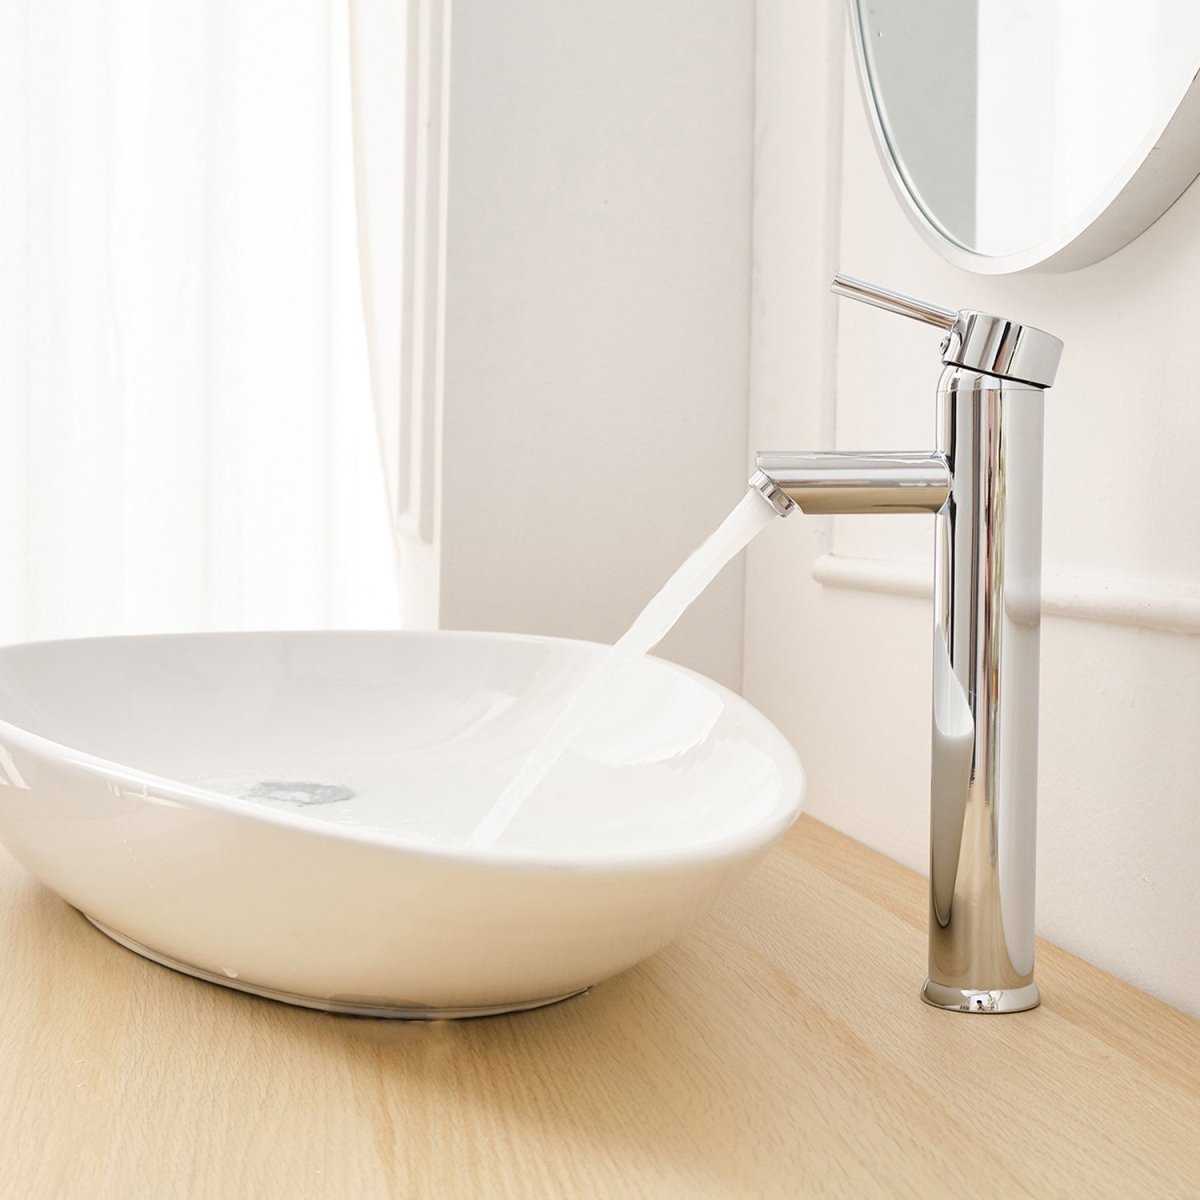 Single Handle with Supply Hose Bathroom Sink Faucet Chrome - buyfaucet.com